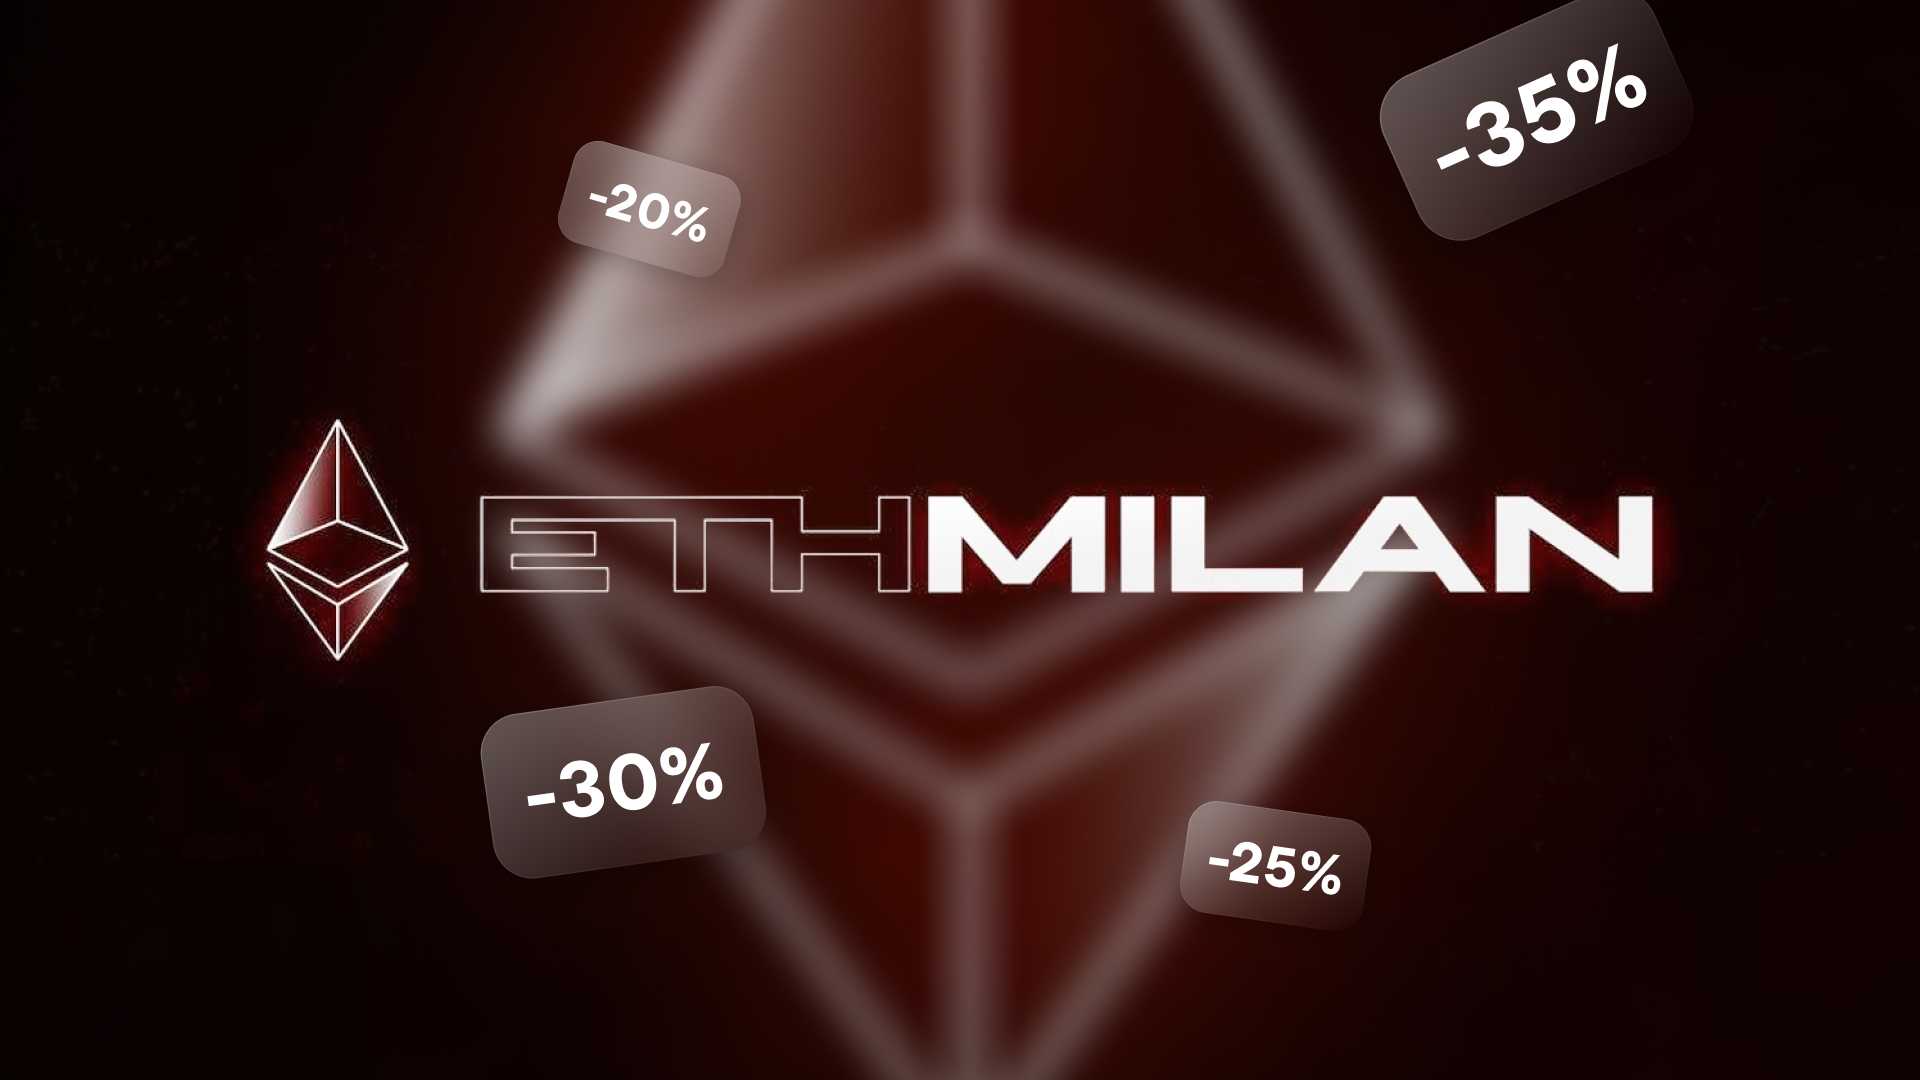 ETHMilan codice sconto: l’evento italiano su Ethereum